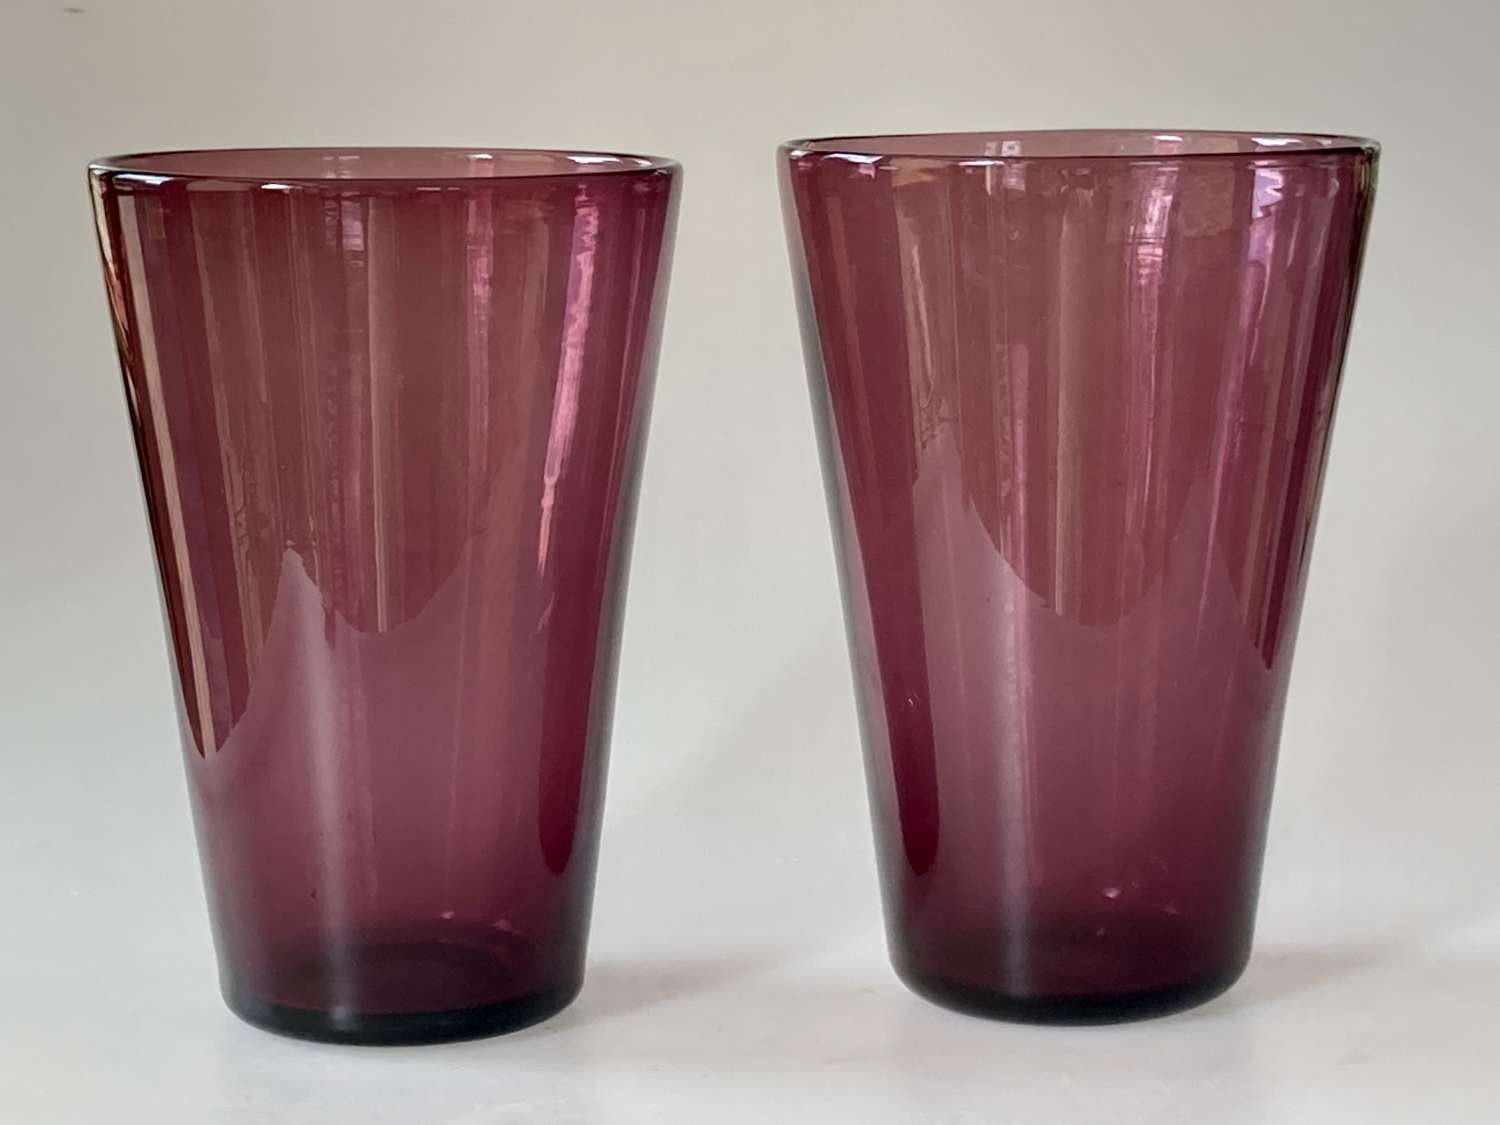 Pair of amethyst glass tumbler vases